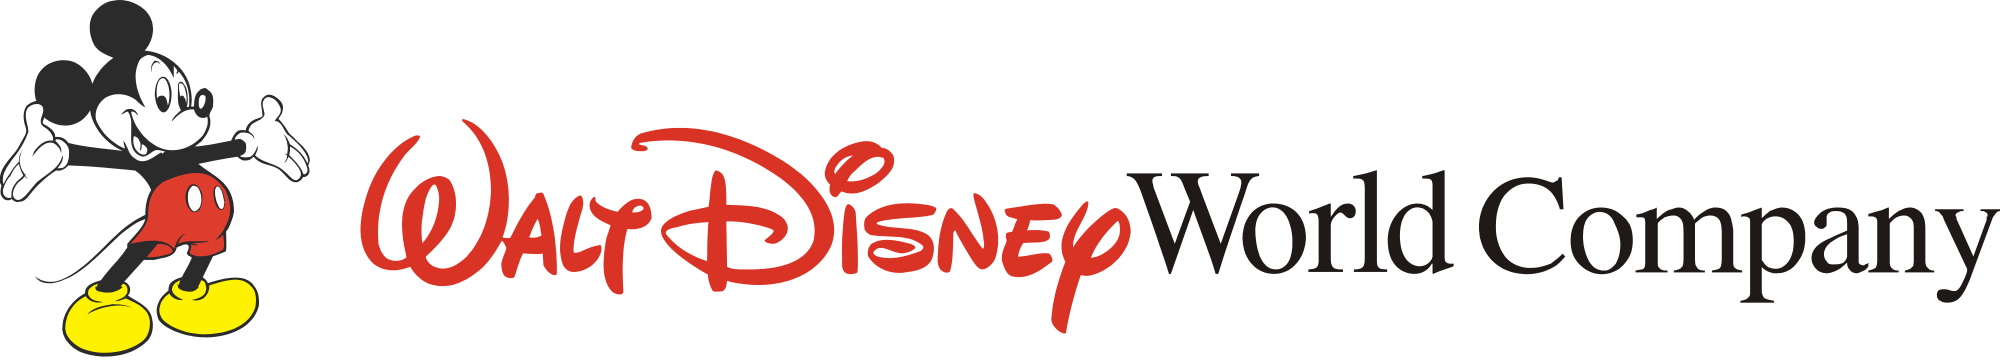 Walt Disney World Company Logo - Walt Disney World Company | Disney Wiki | FANDOM powered by Wikia